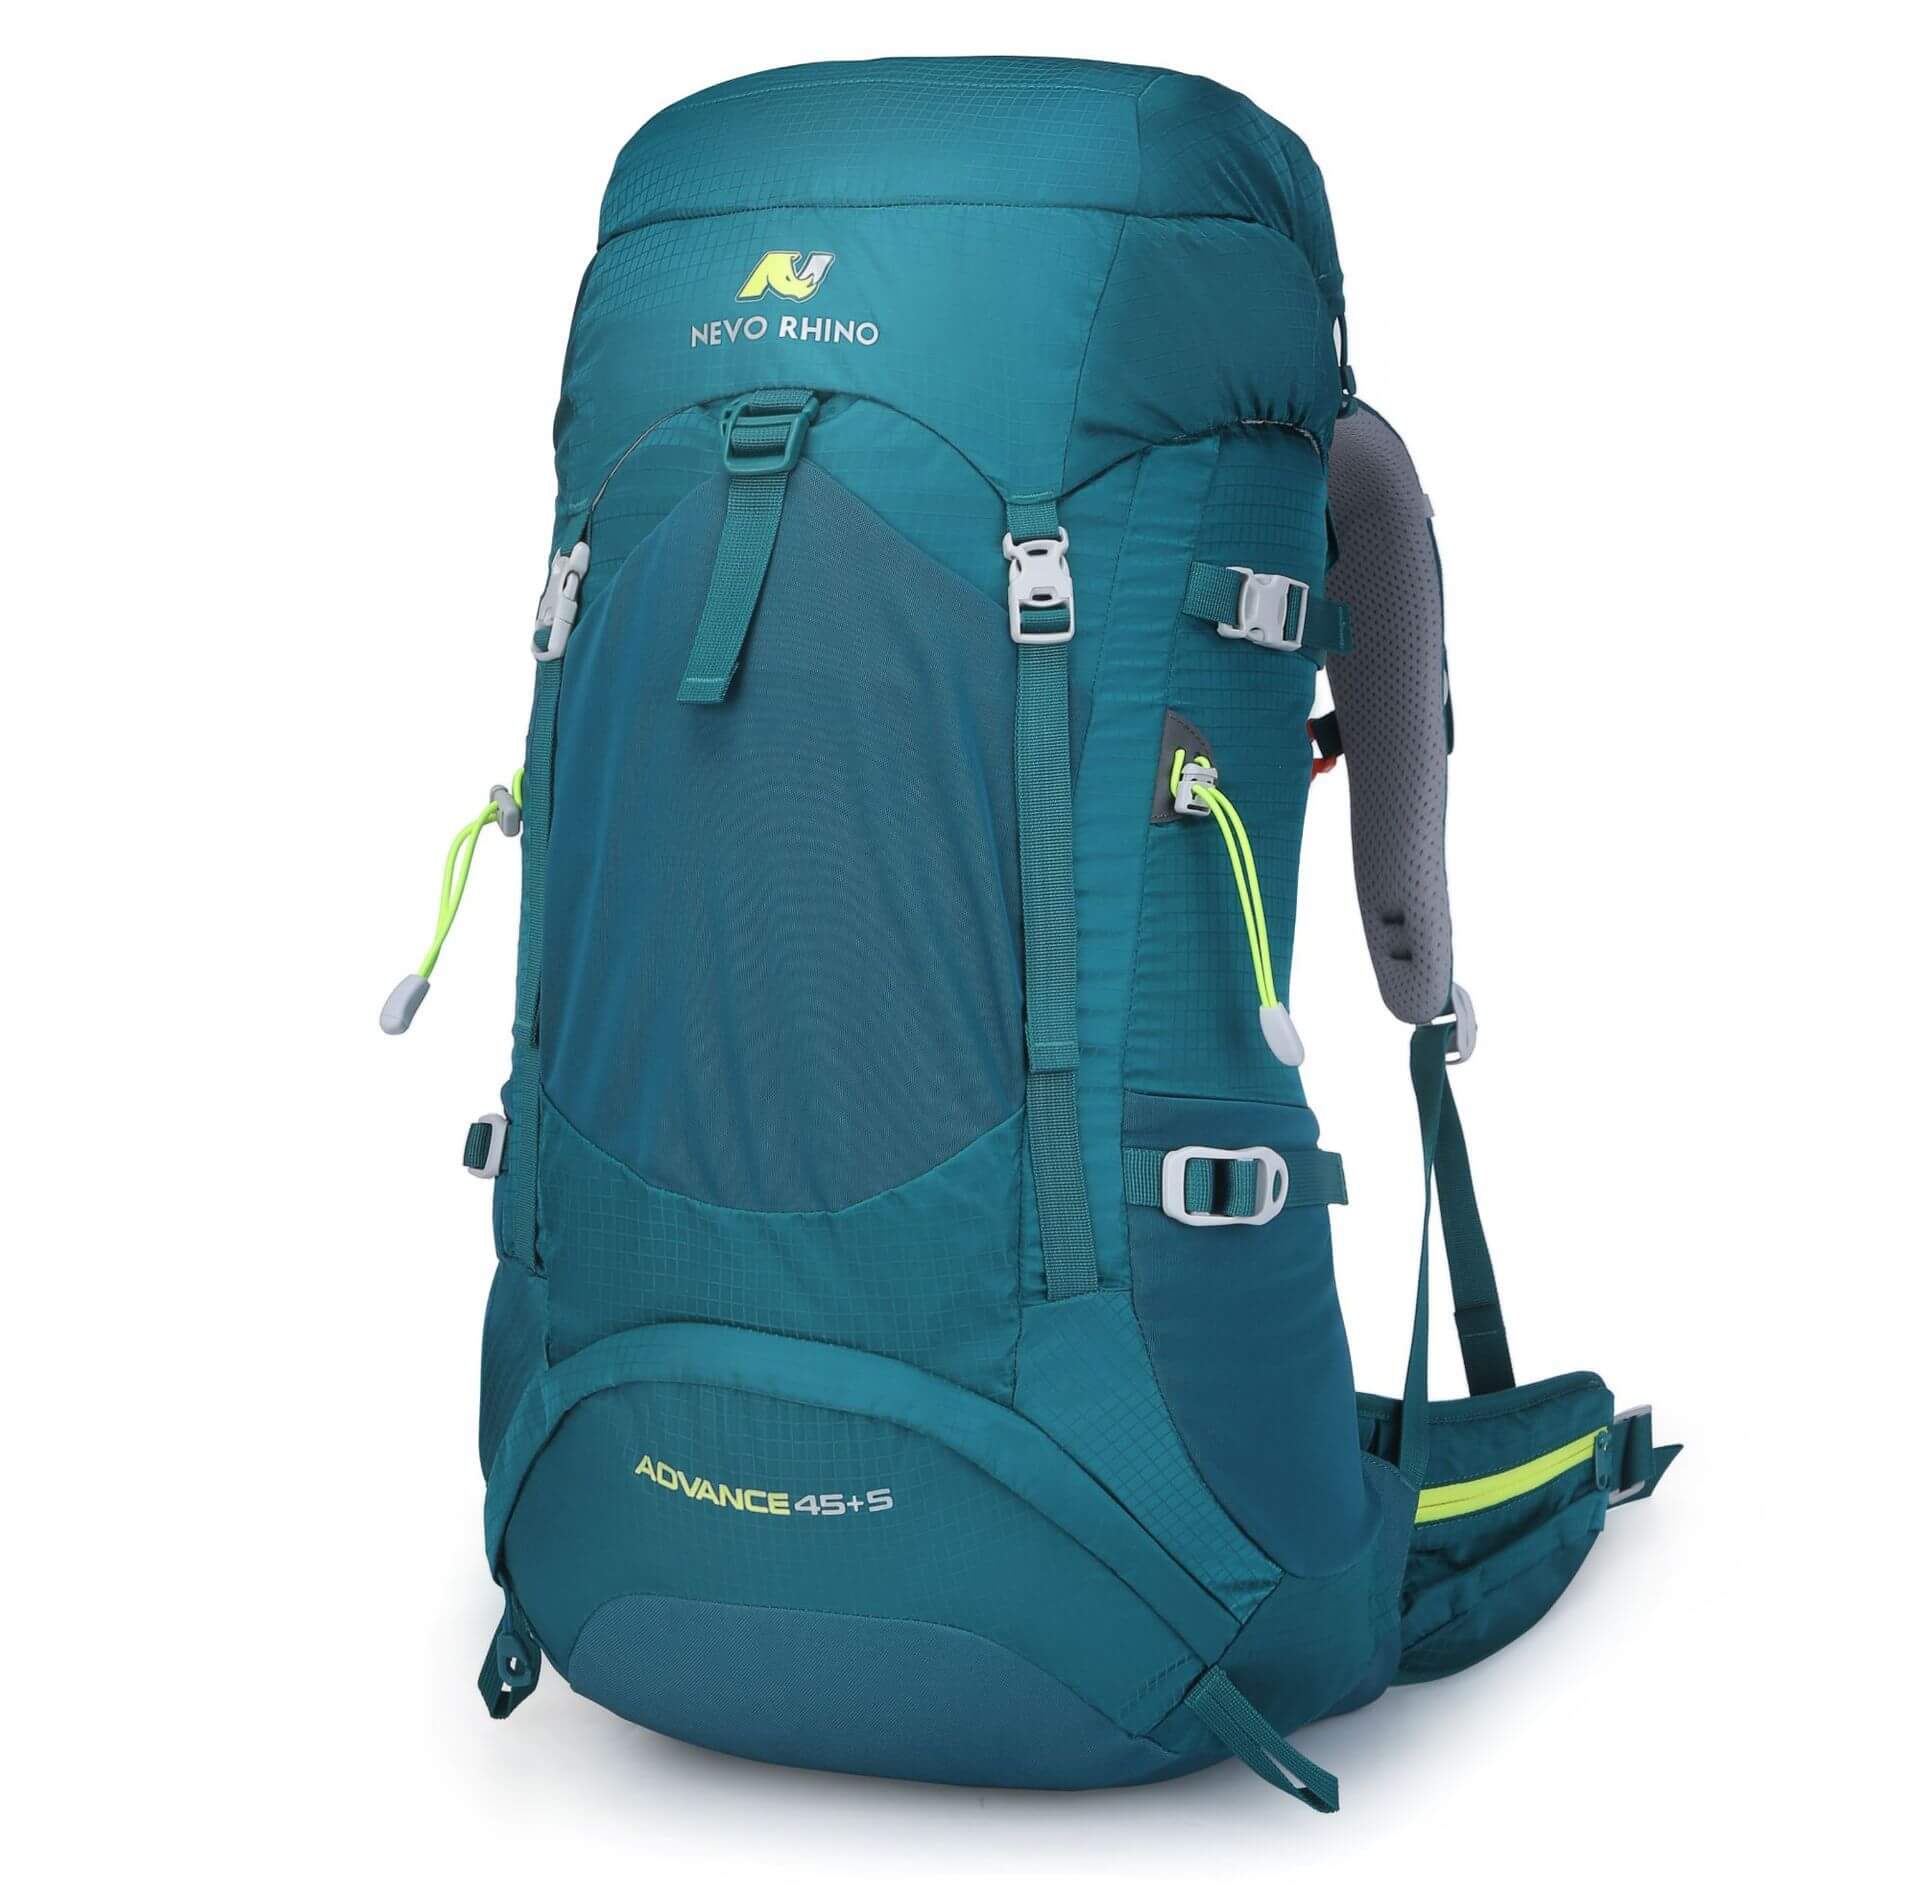 55L Adventure Backpack